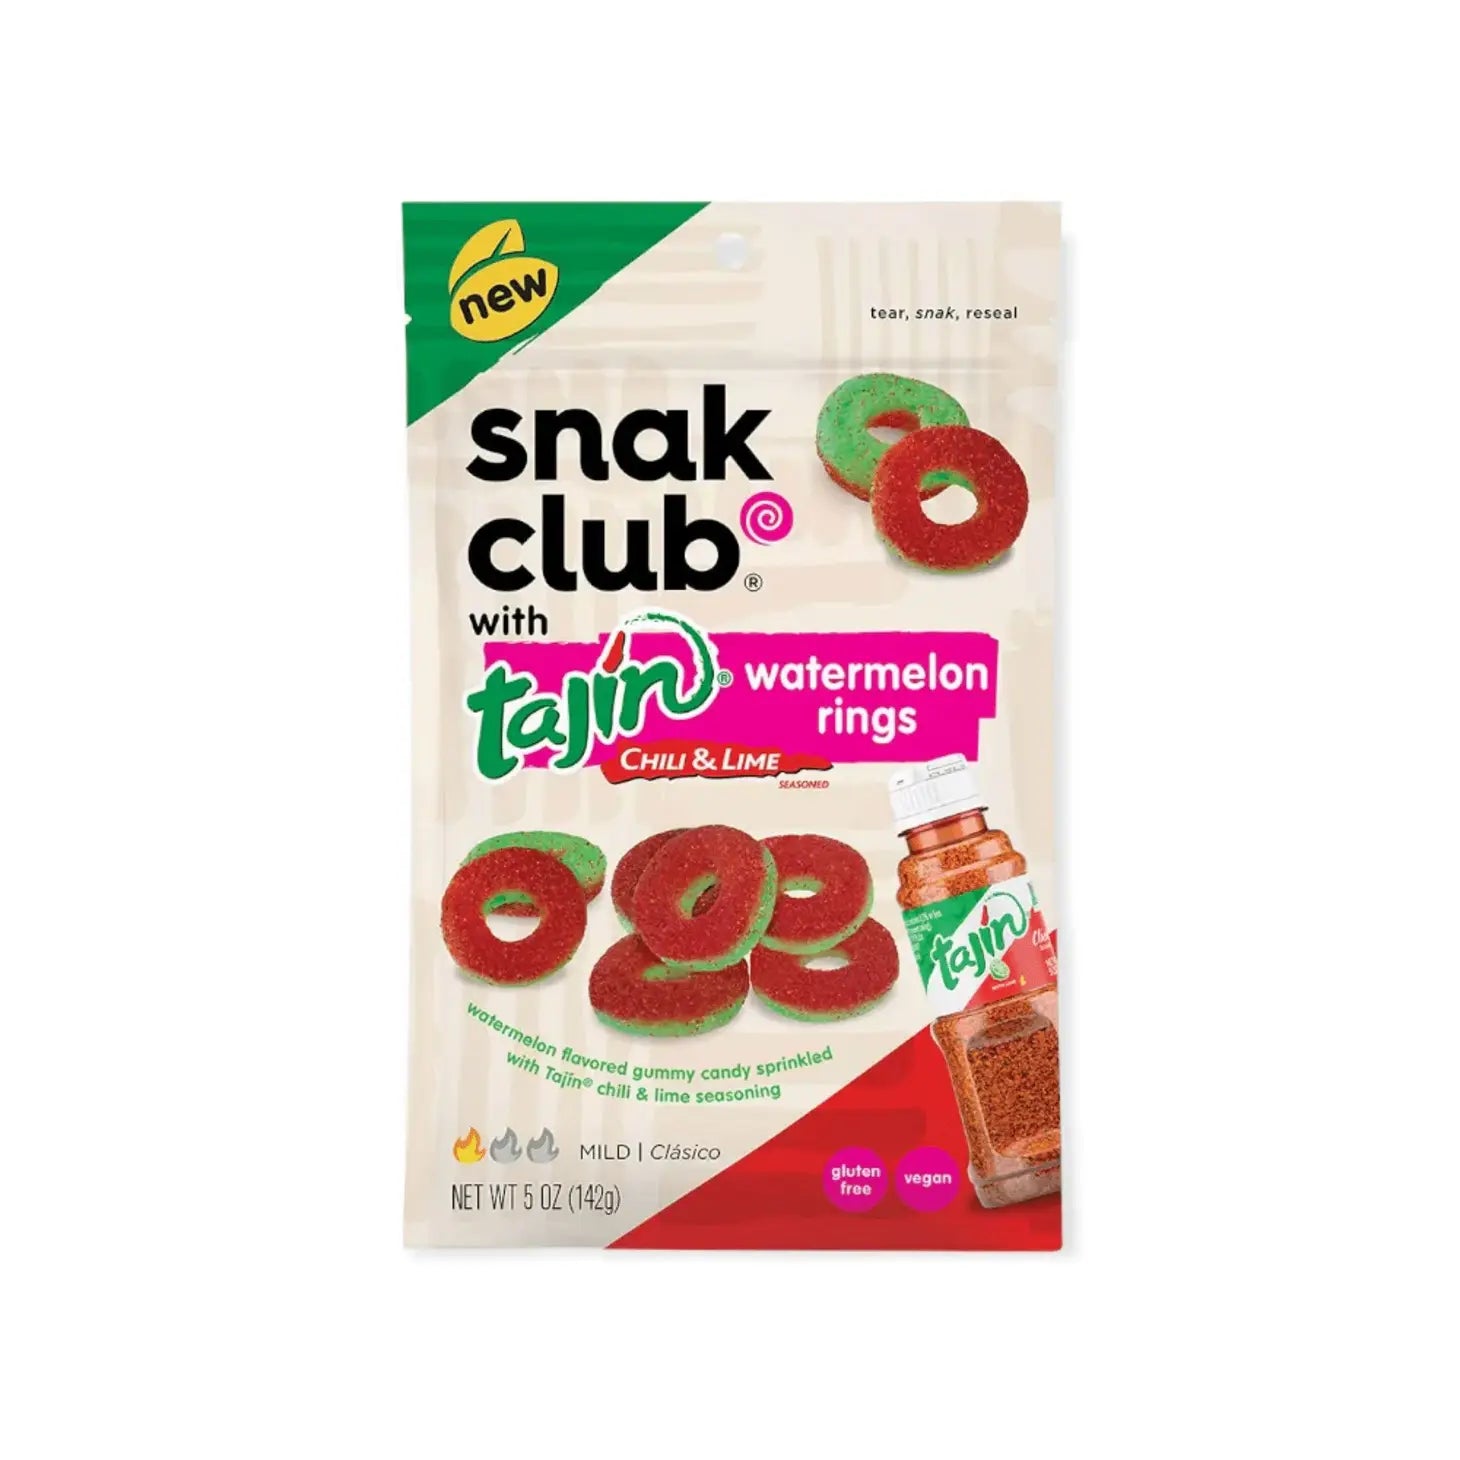 Snak Club Tajin Chili & Lime Watermelon Rings - 5oz